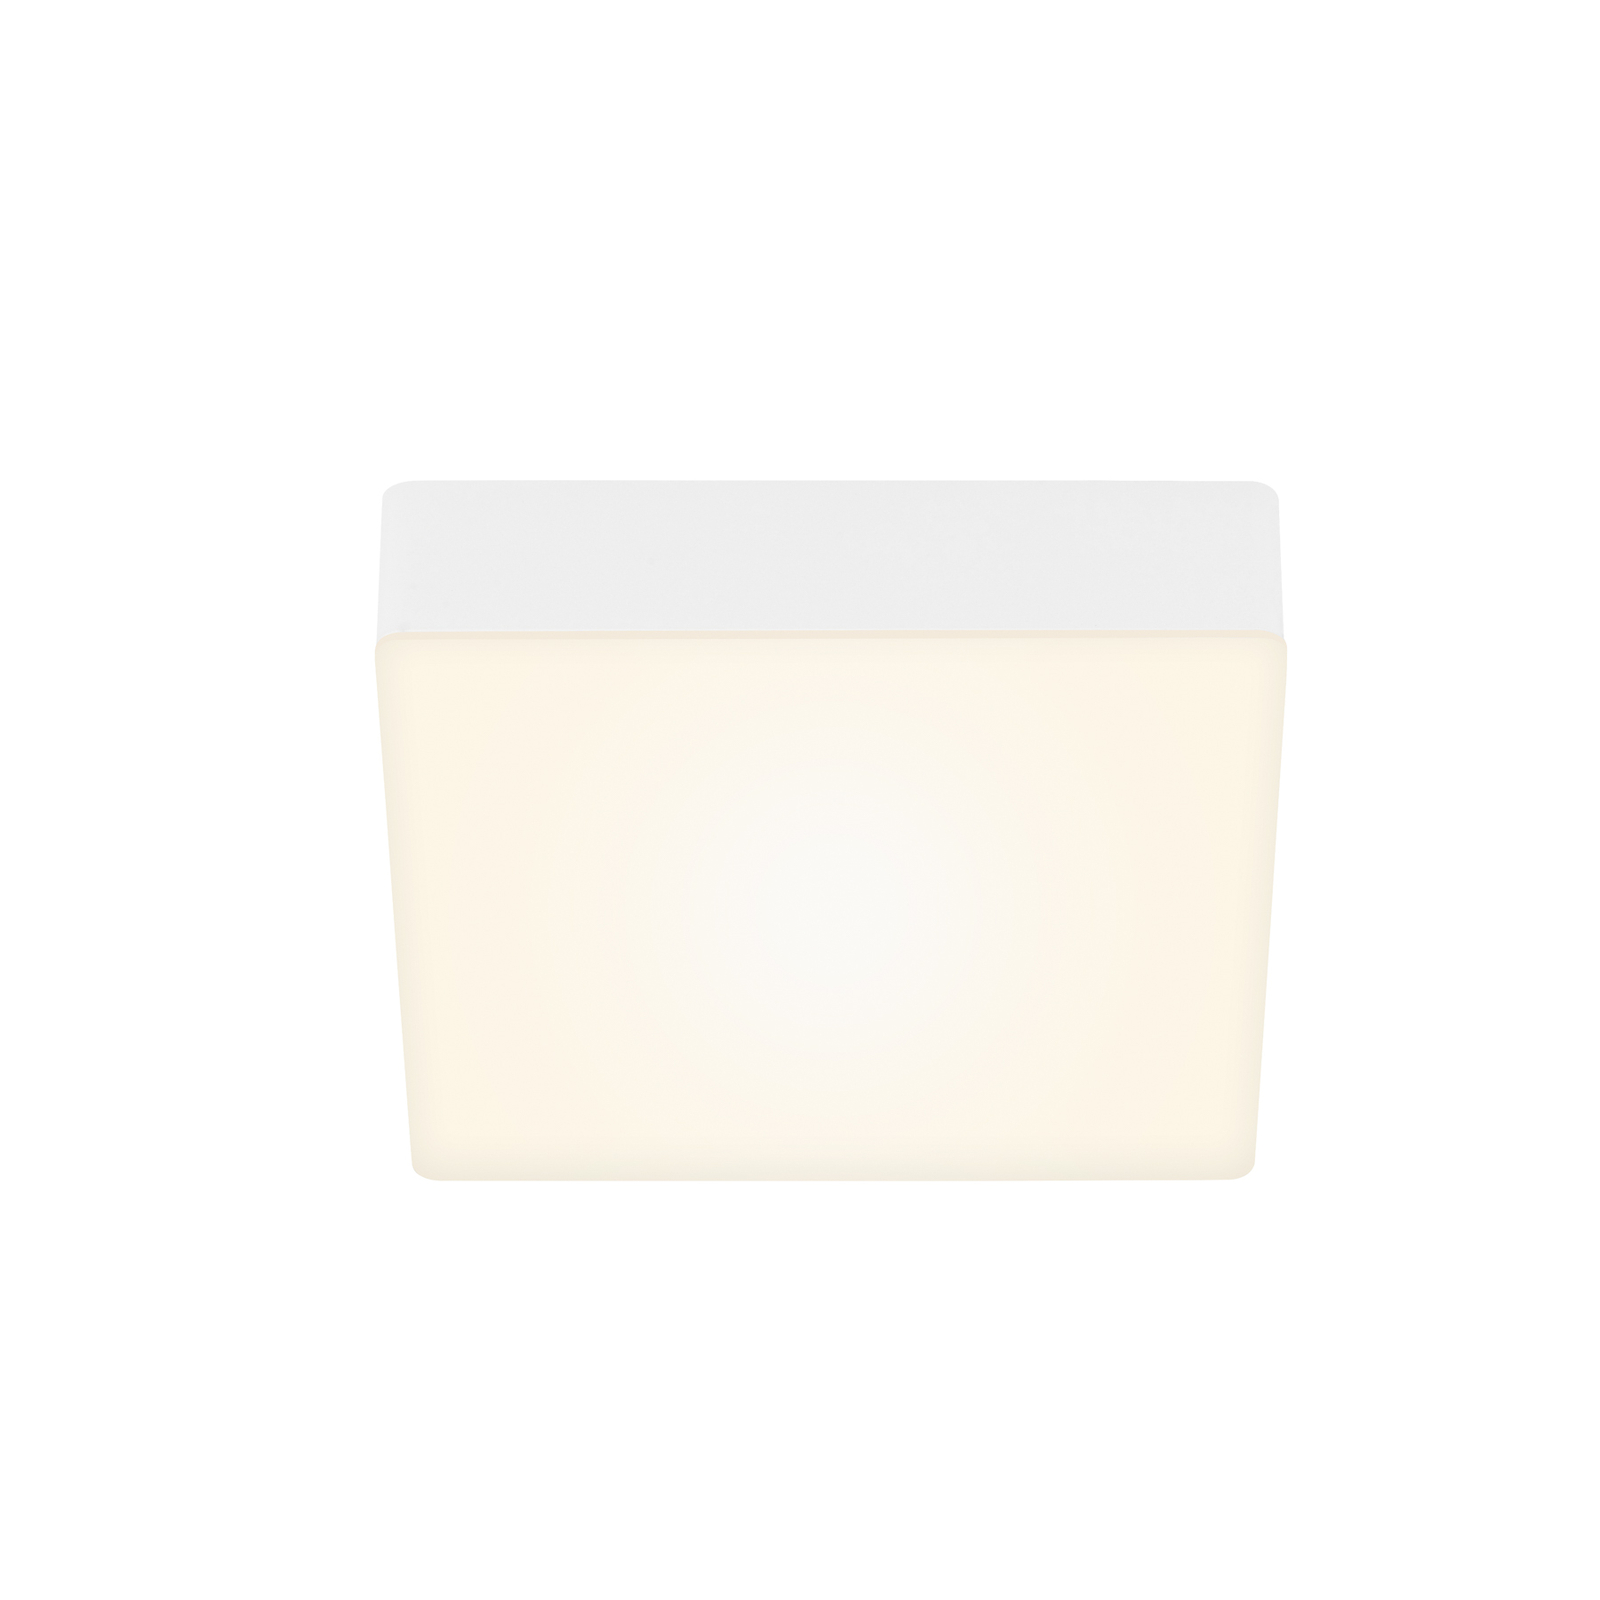 Plafonnier LED Flame, 15,7 x 15,7 cm, blanc